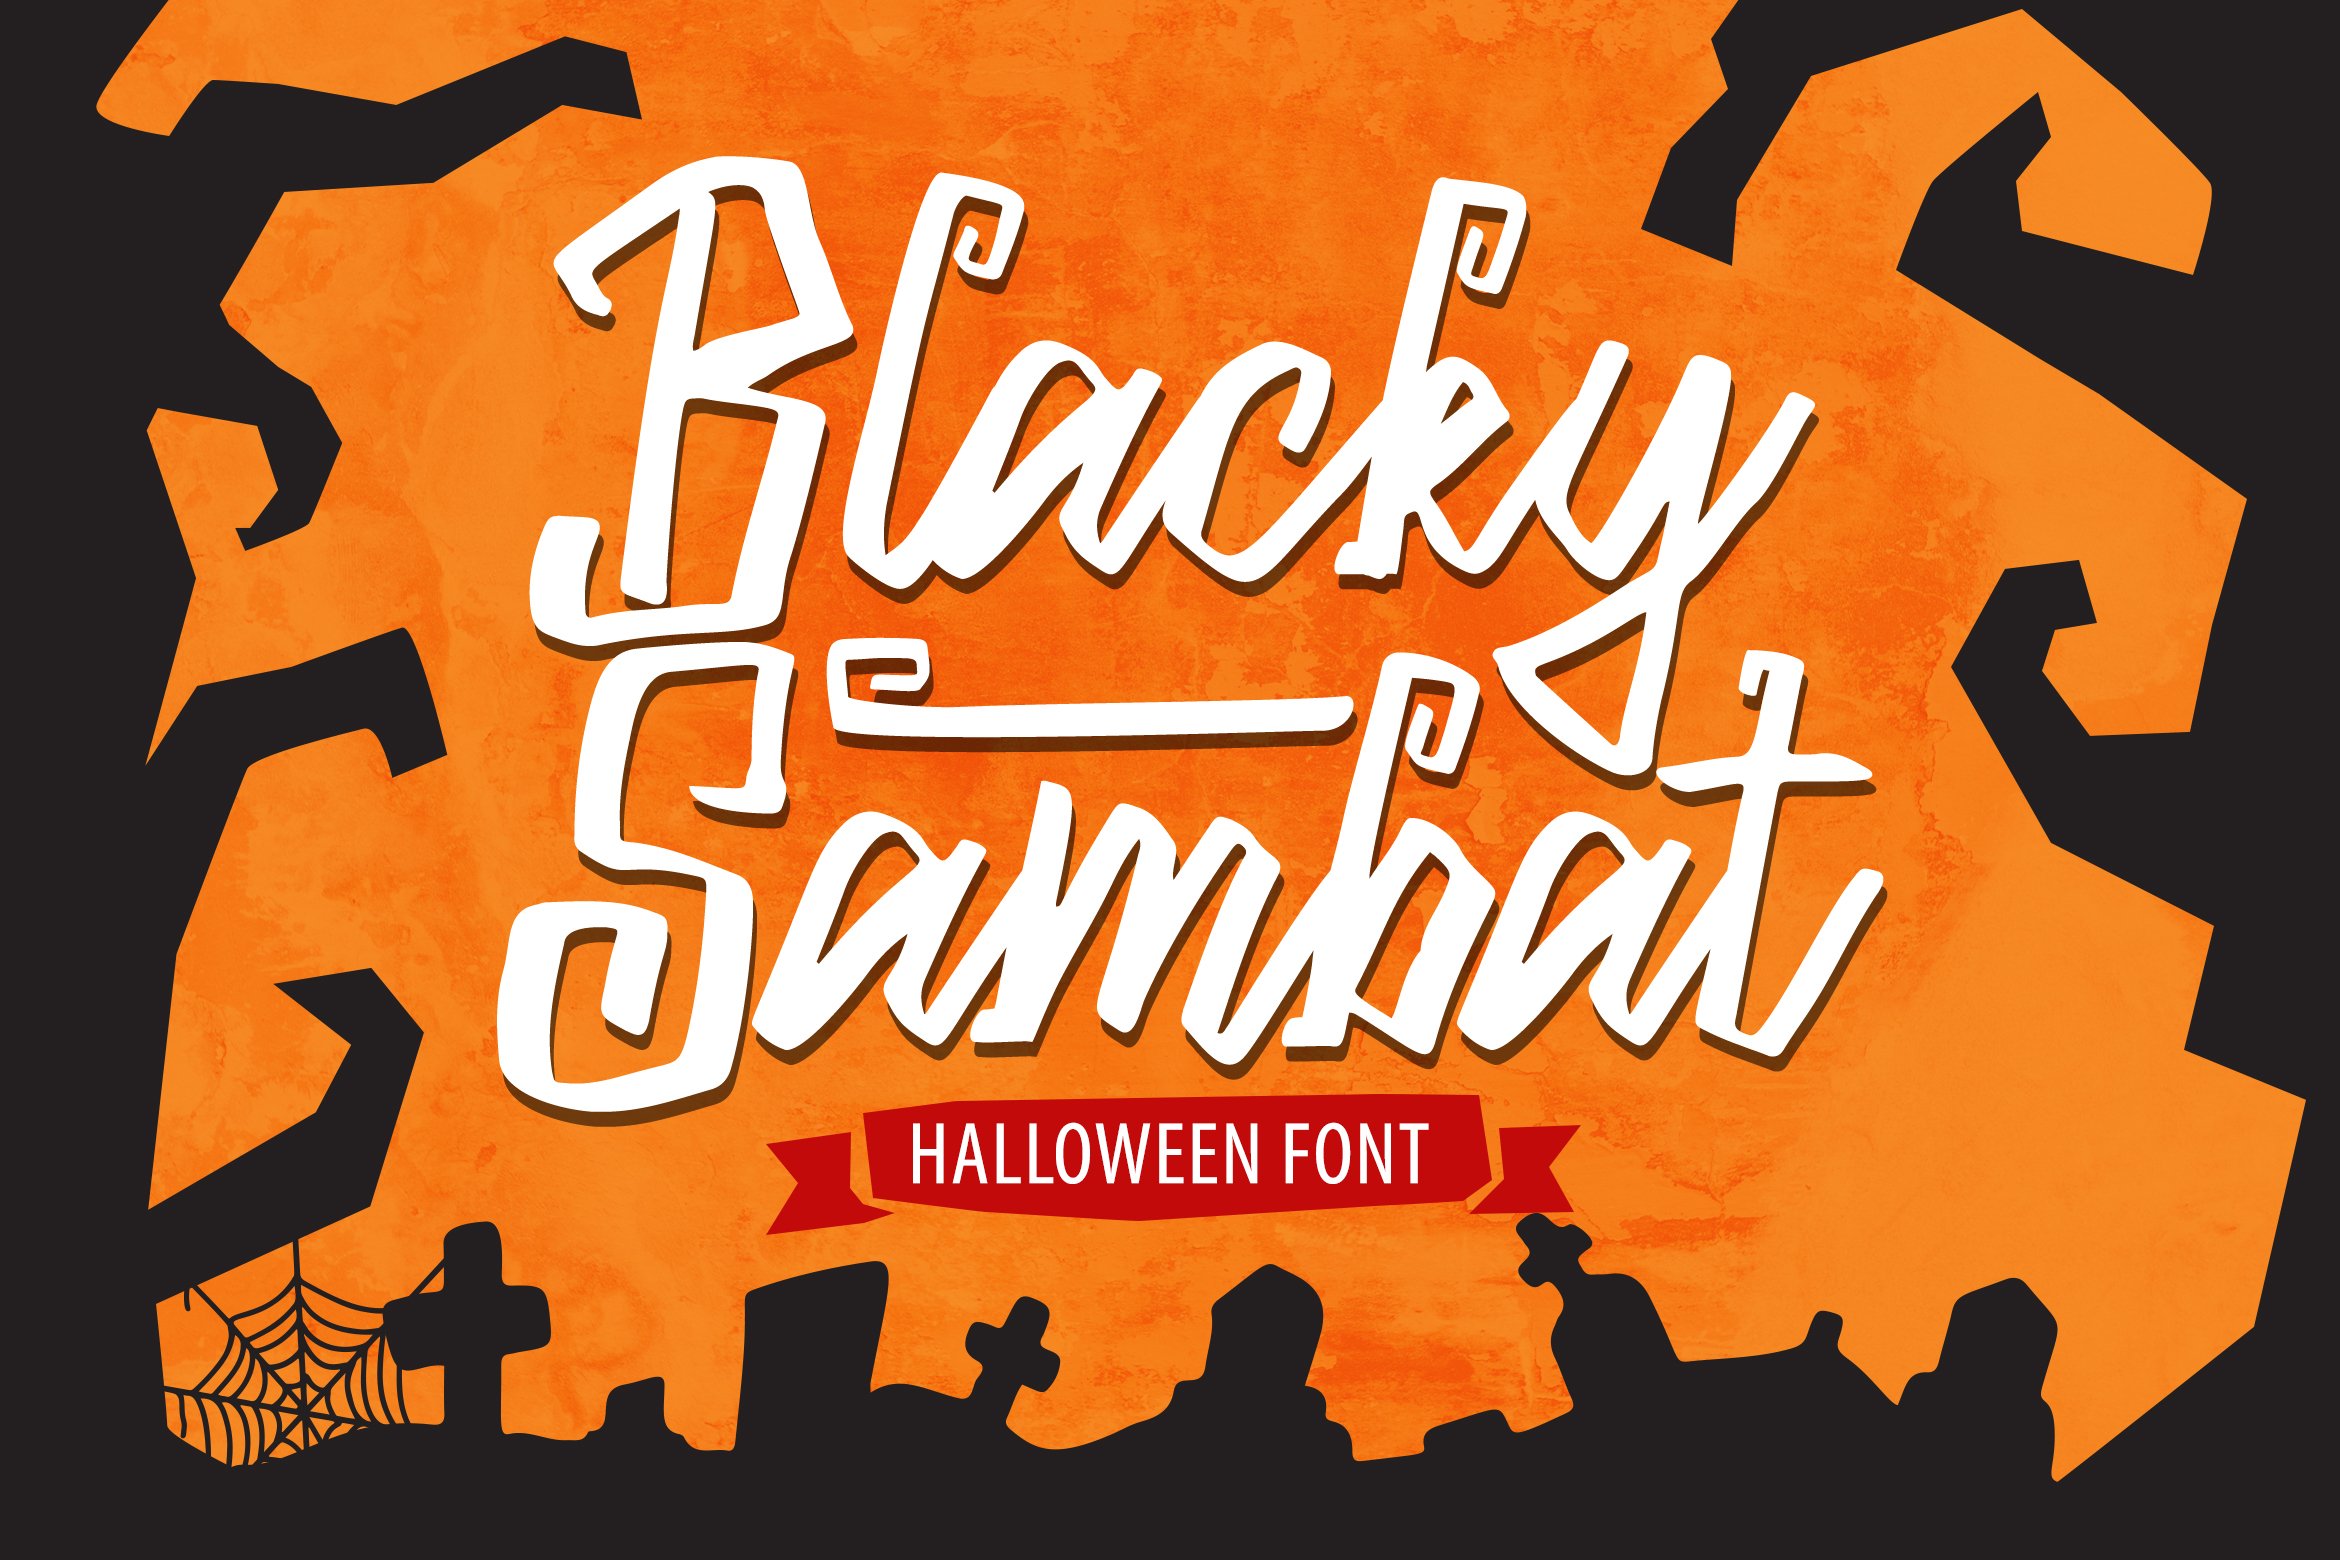 Blacky Sambat - Halloween Font cover image.